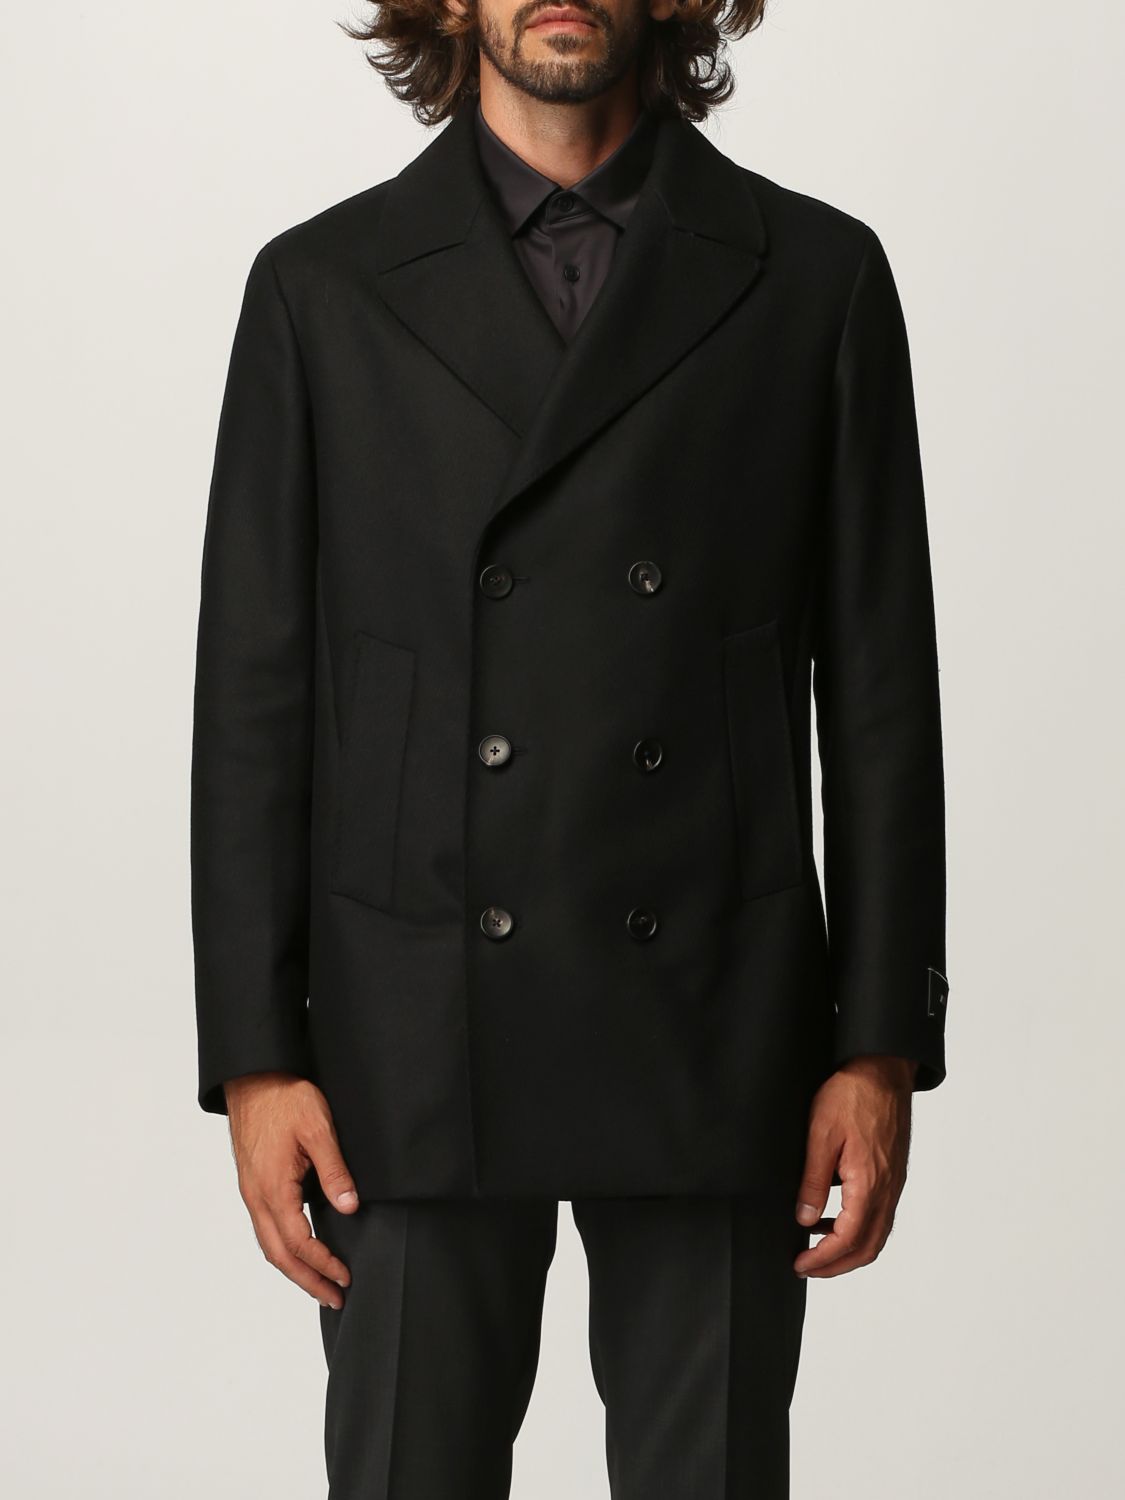 Z ZEGNA: coat for man - Black | Z Zegna coat 4DG6G0 289 online on ...